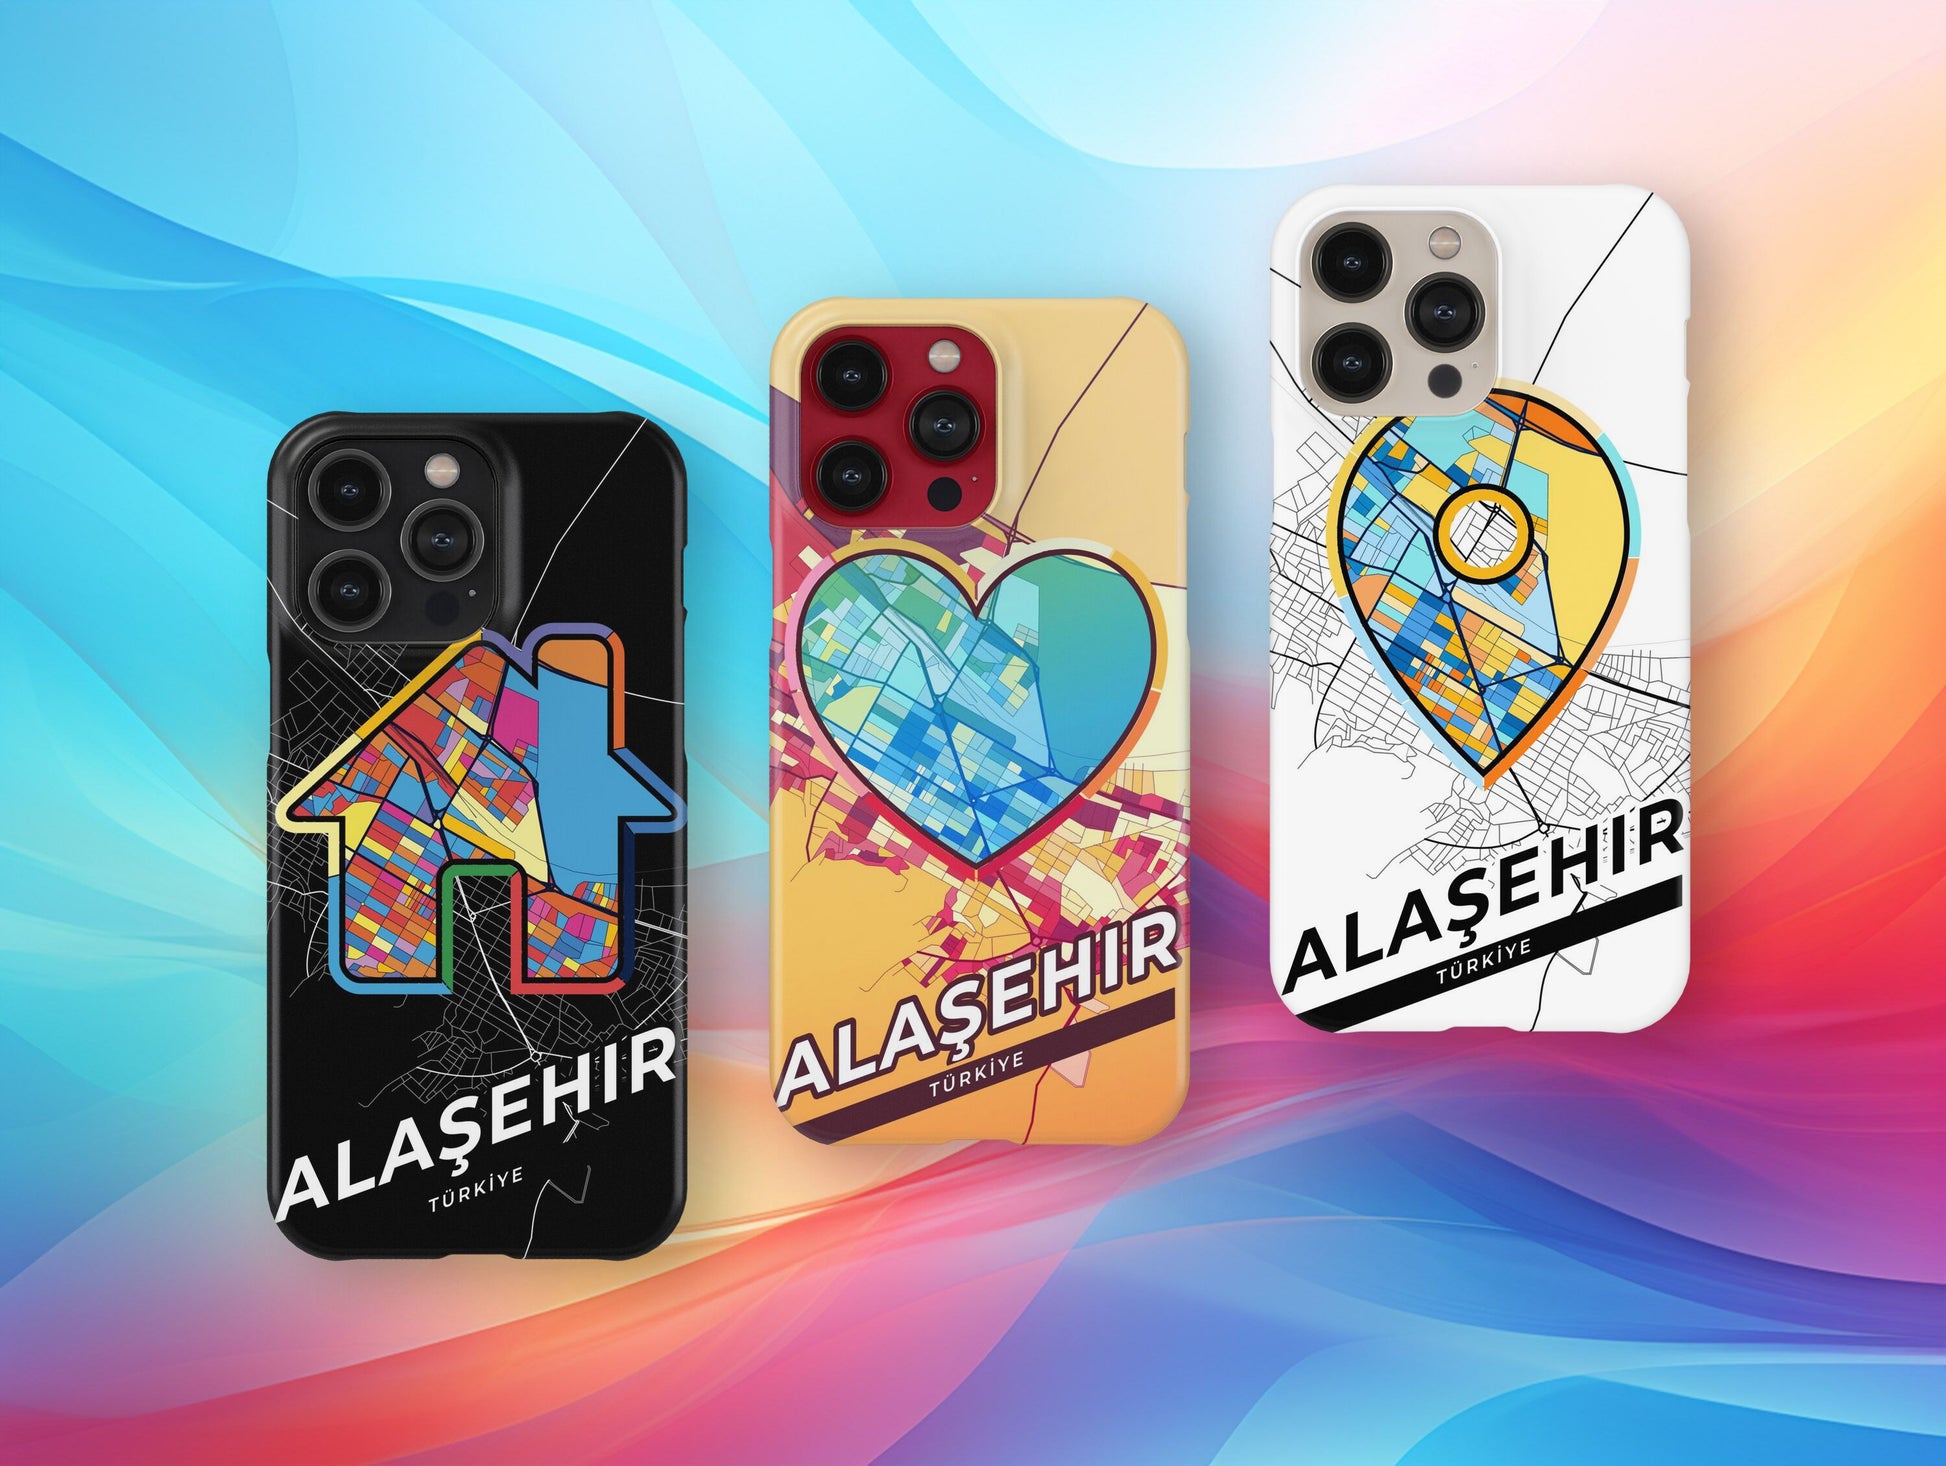 Alaşehir Turkey slim phone case with colorful icon. Birthday, wedding or housewarming gift. Couple match cases.